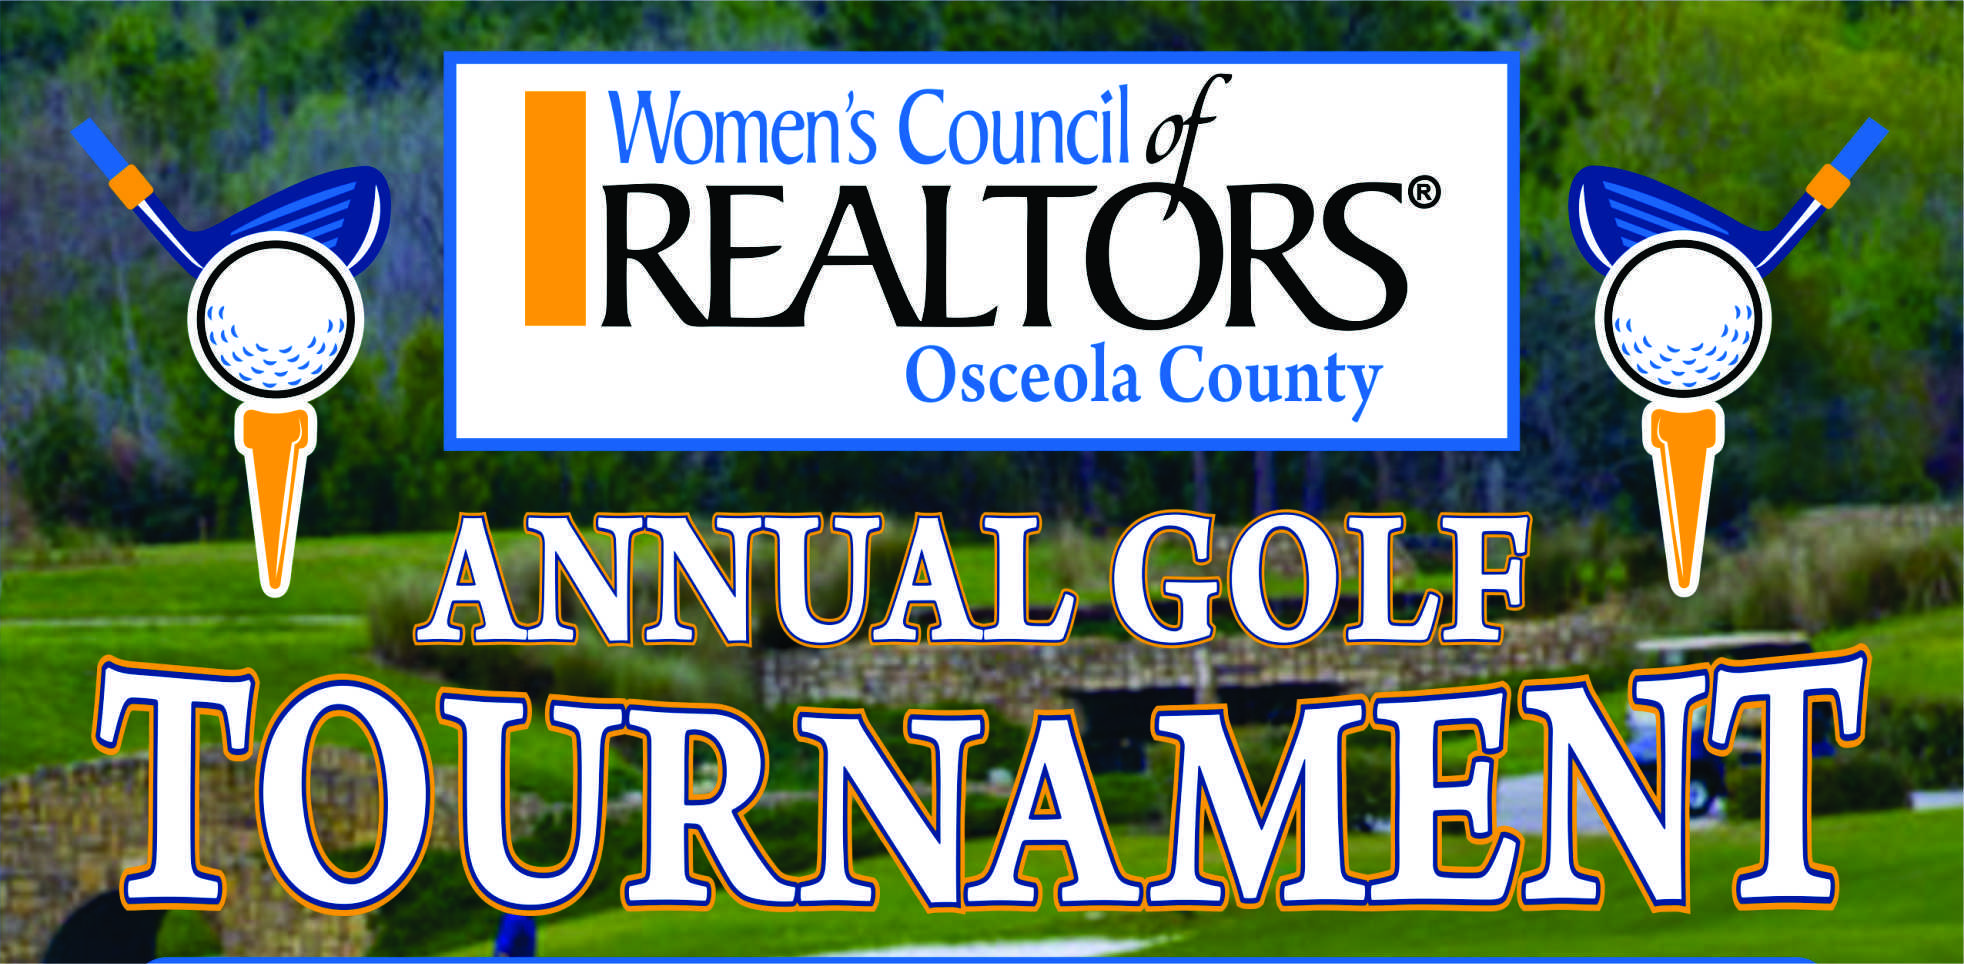 Annual Golf Tournament Women's Council of REALTORS Osceola County